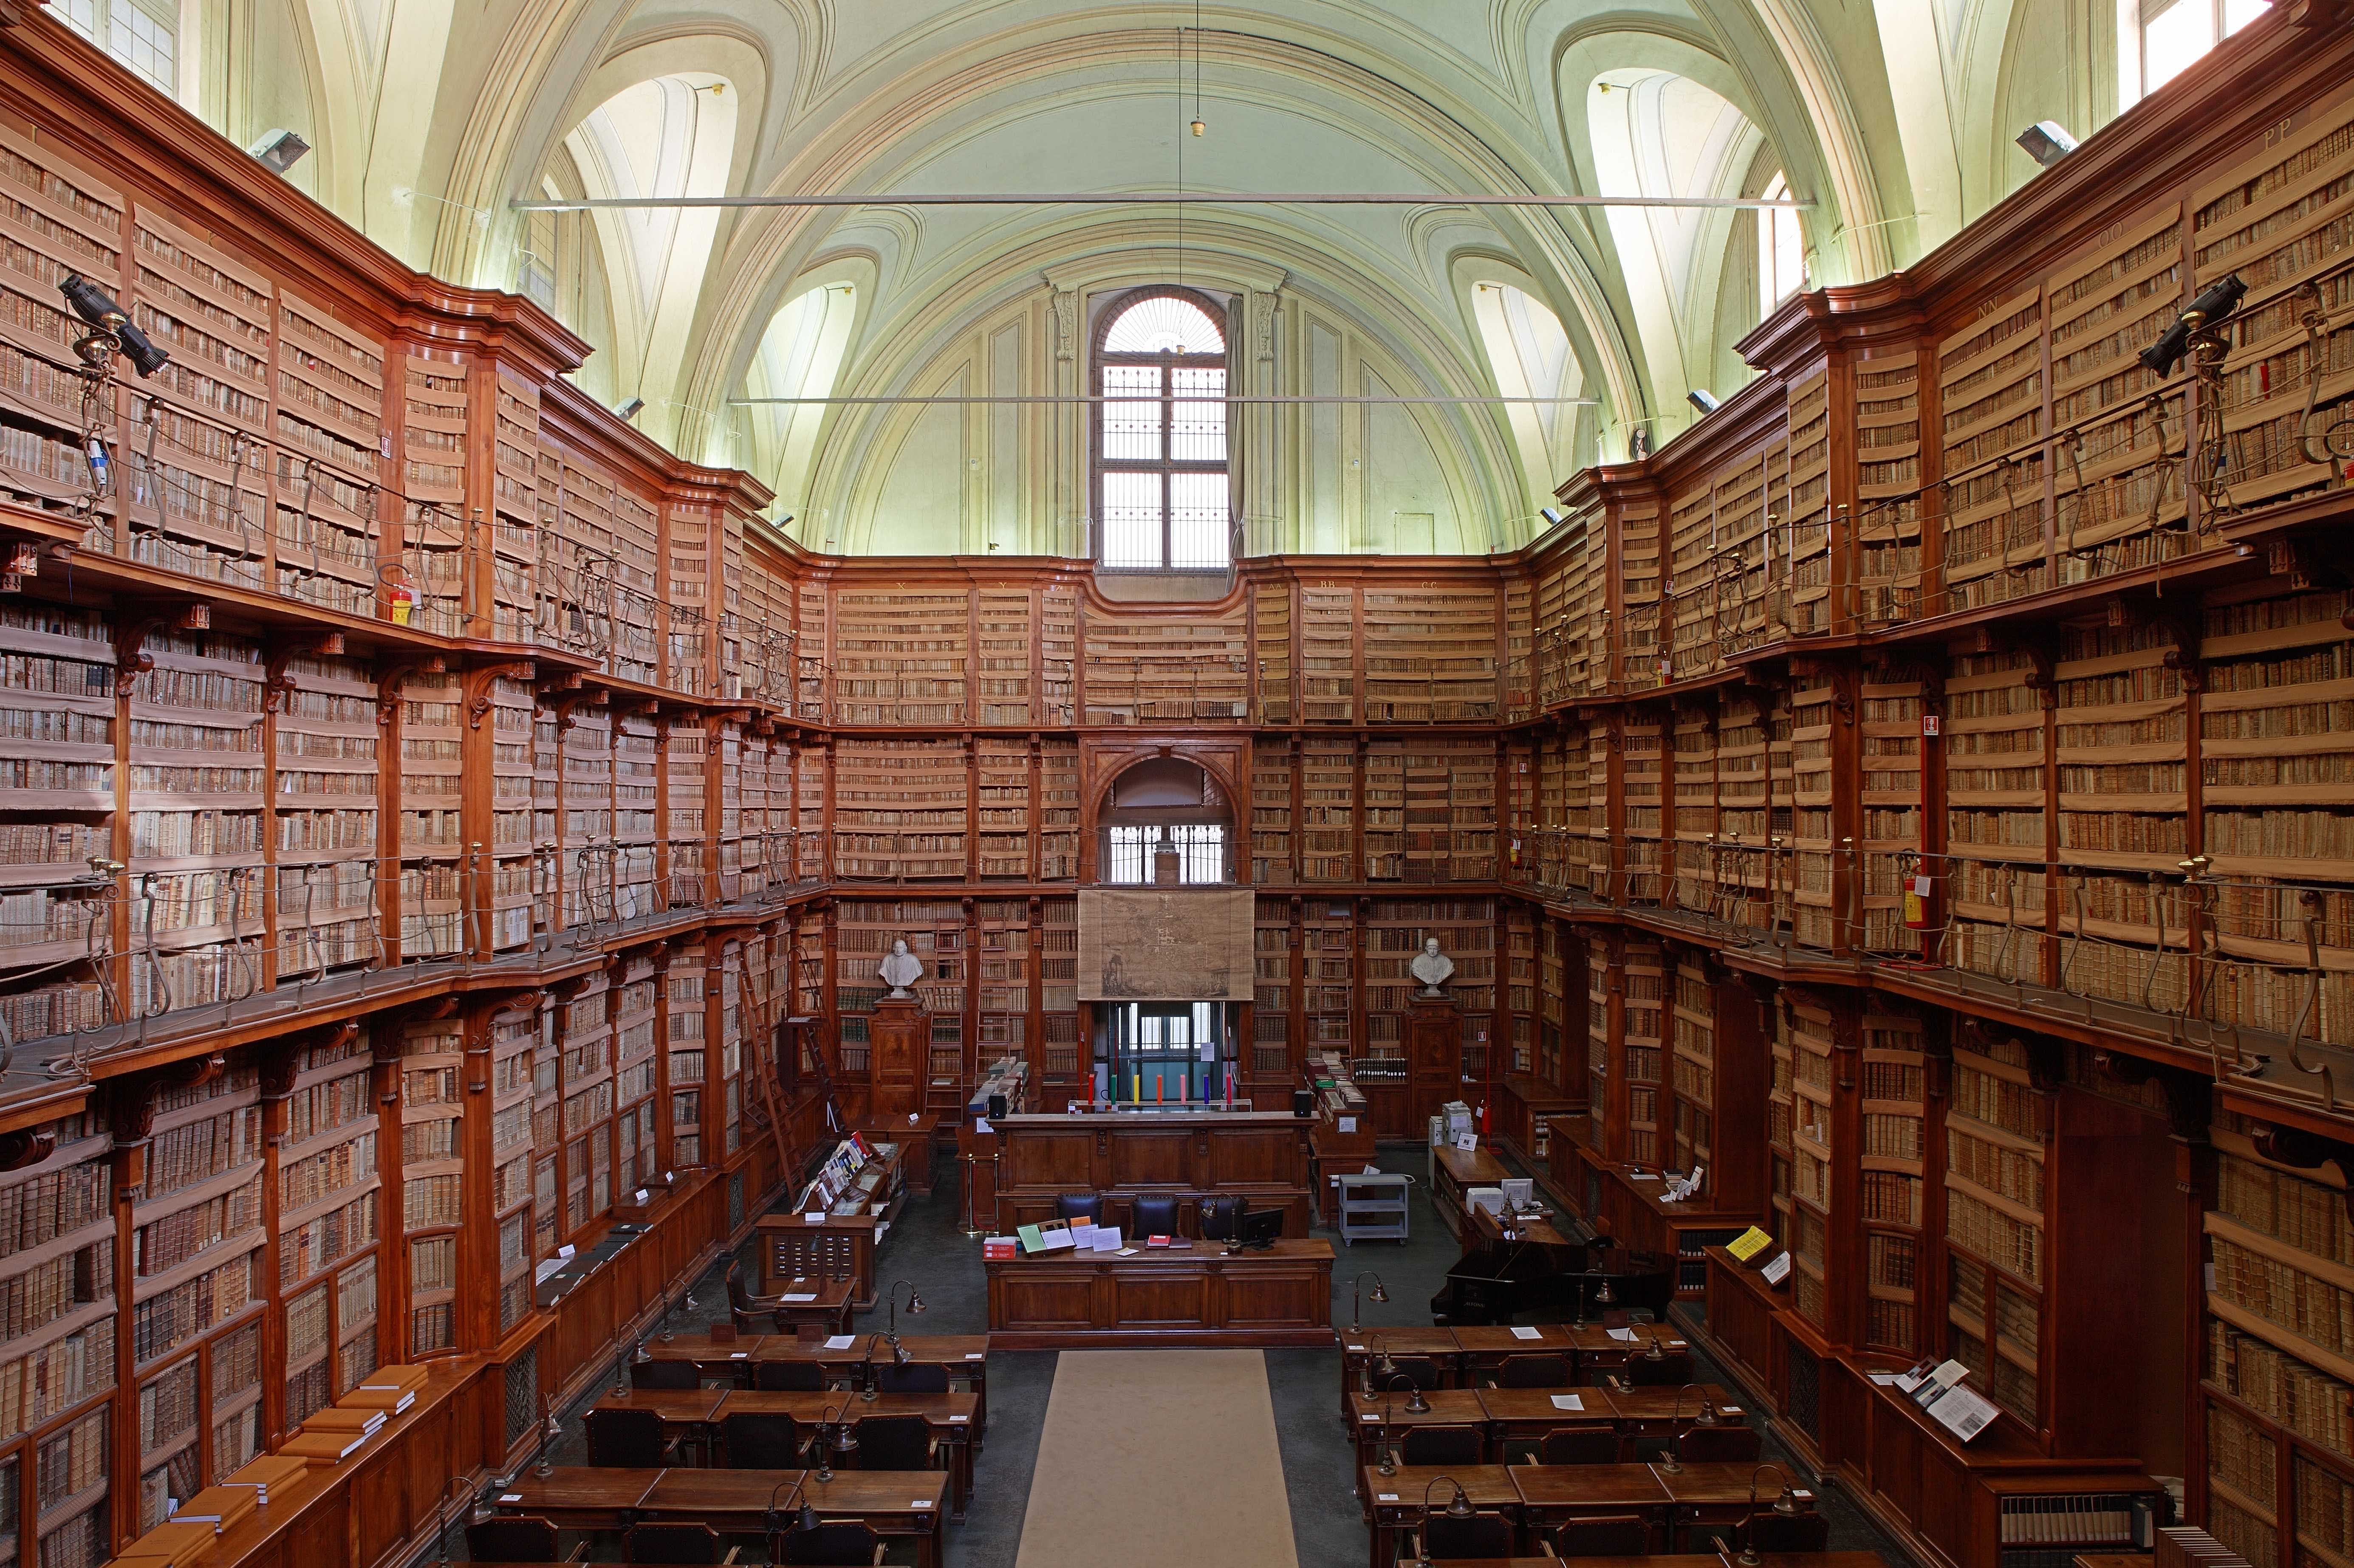 Attachment library. Библиотека Гарвардского университета. Университет Неаполя библиотека. Гарвардская библиотека США.